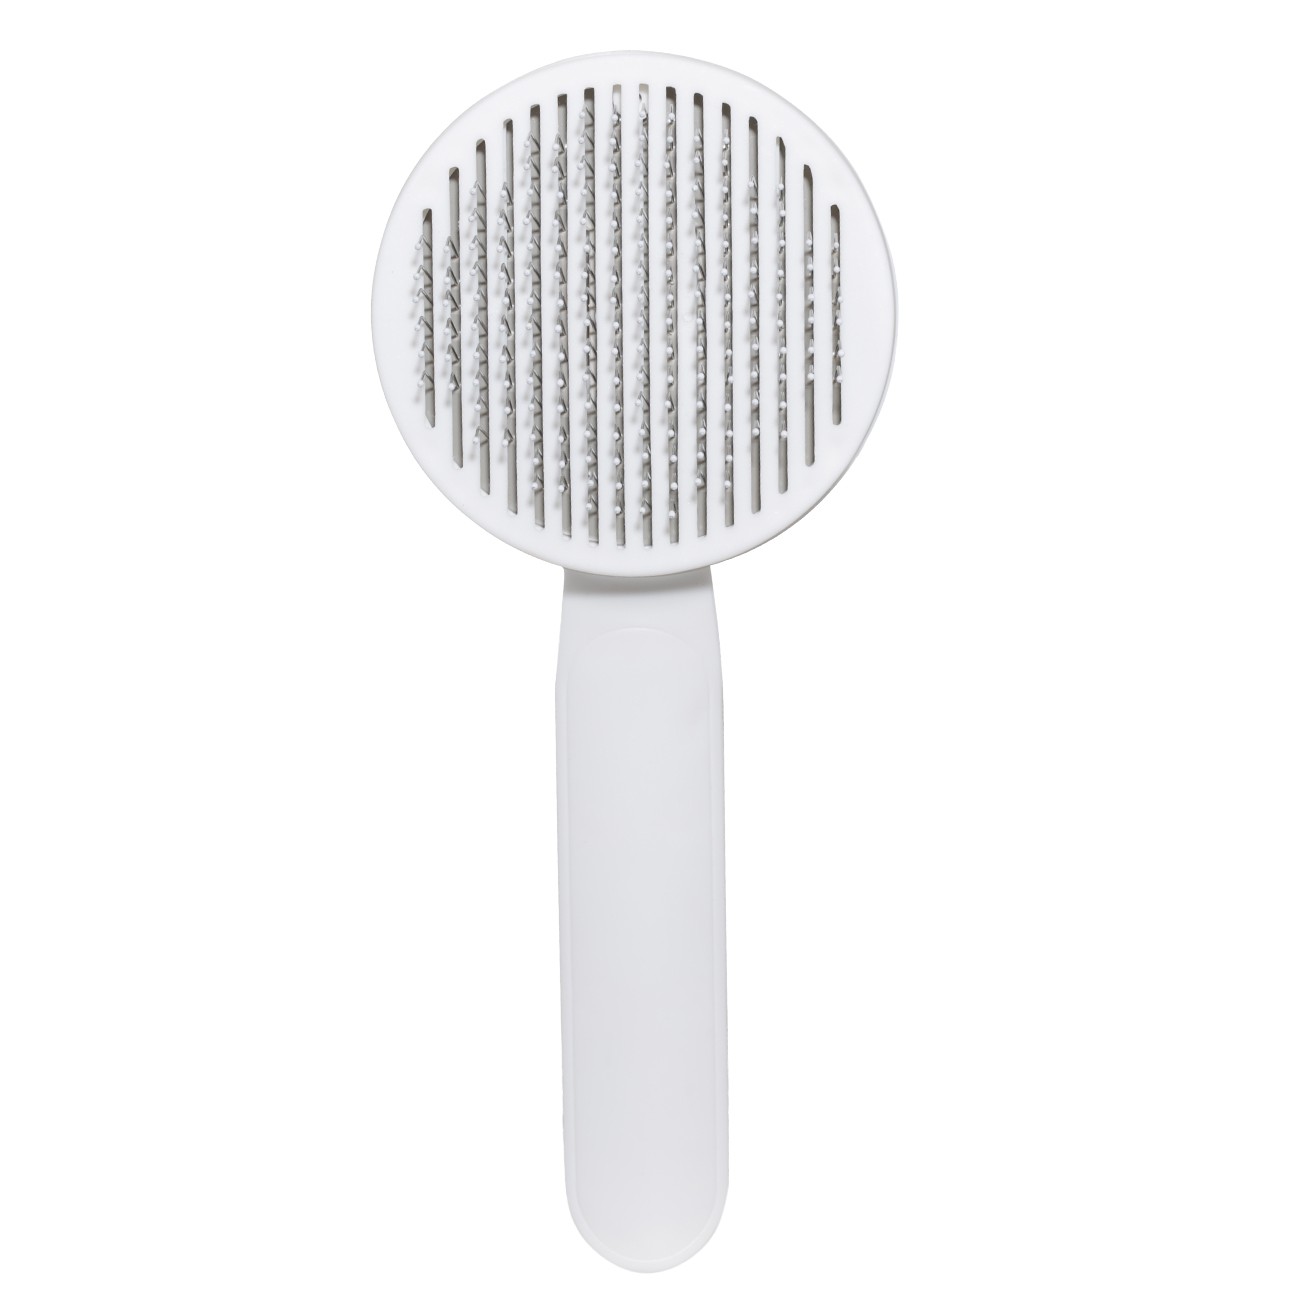 Pet hair comb, 18 cm, Self-cleaning, plastic / steel, White-gray, Ears, Pet изображение № 4